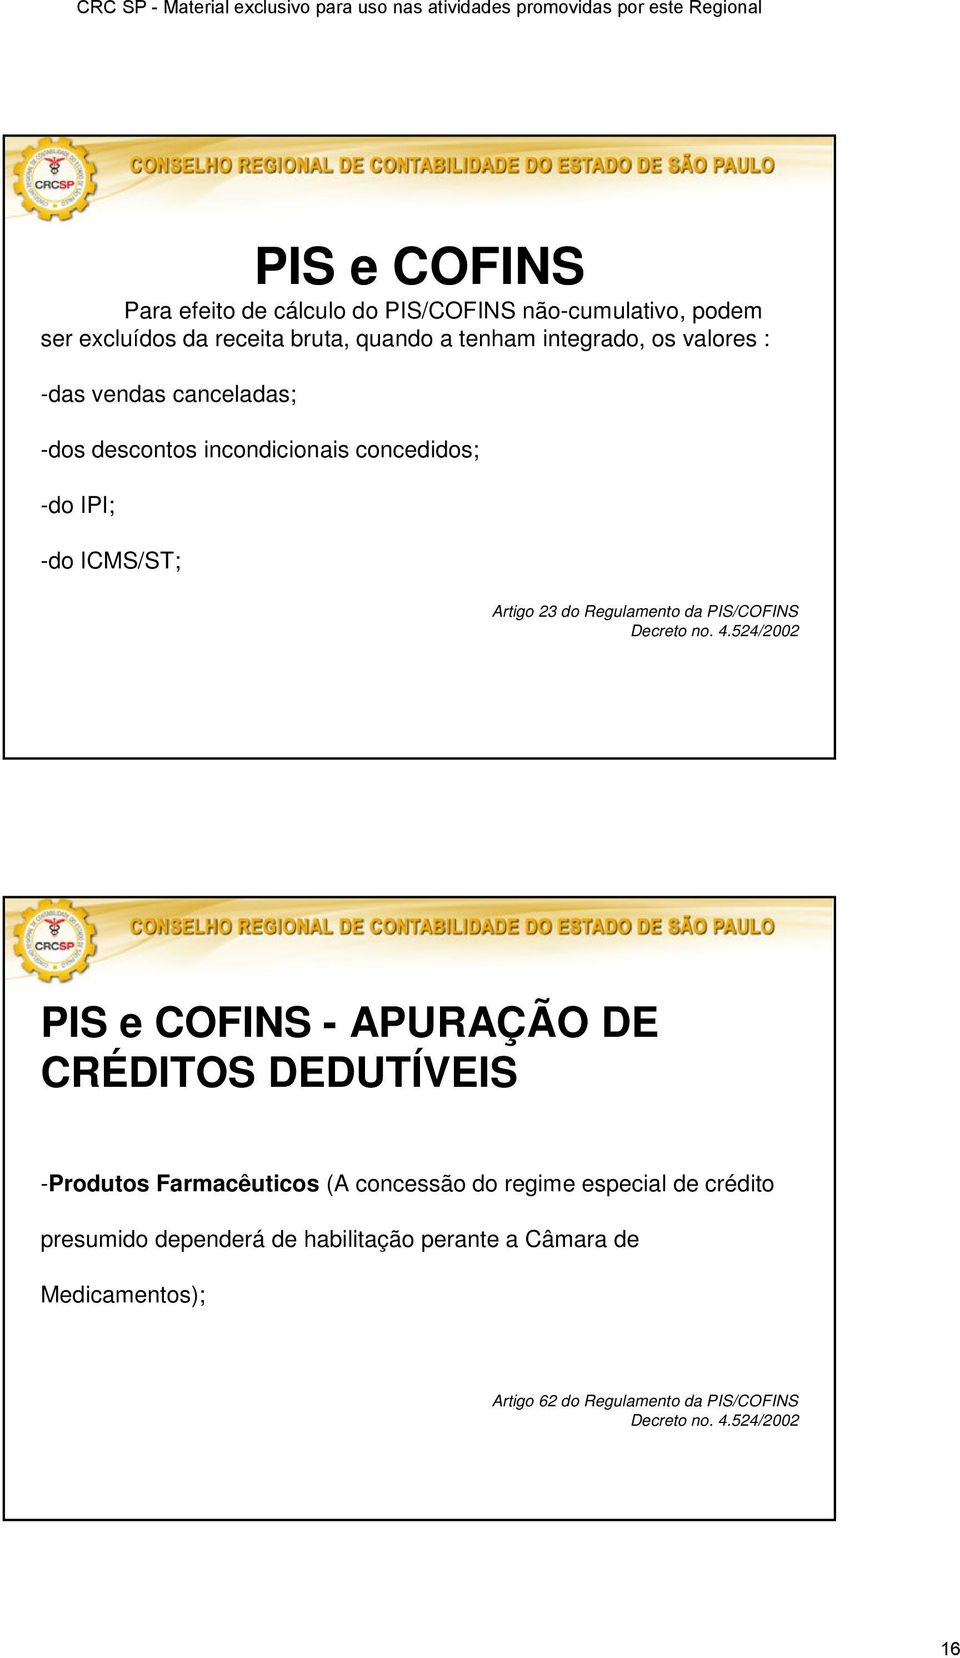 PIS/COFINS Decreto no. 4.